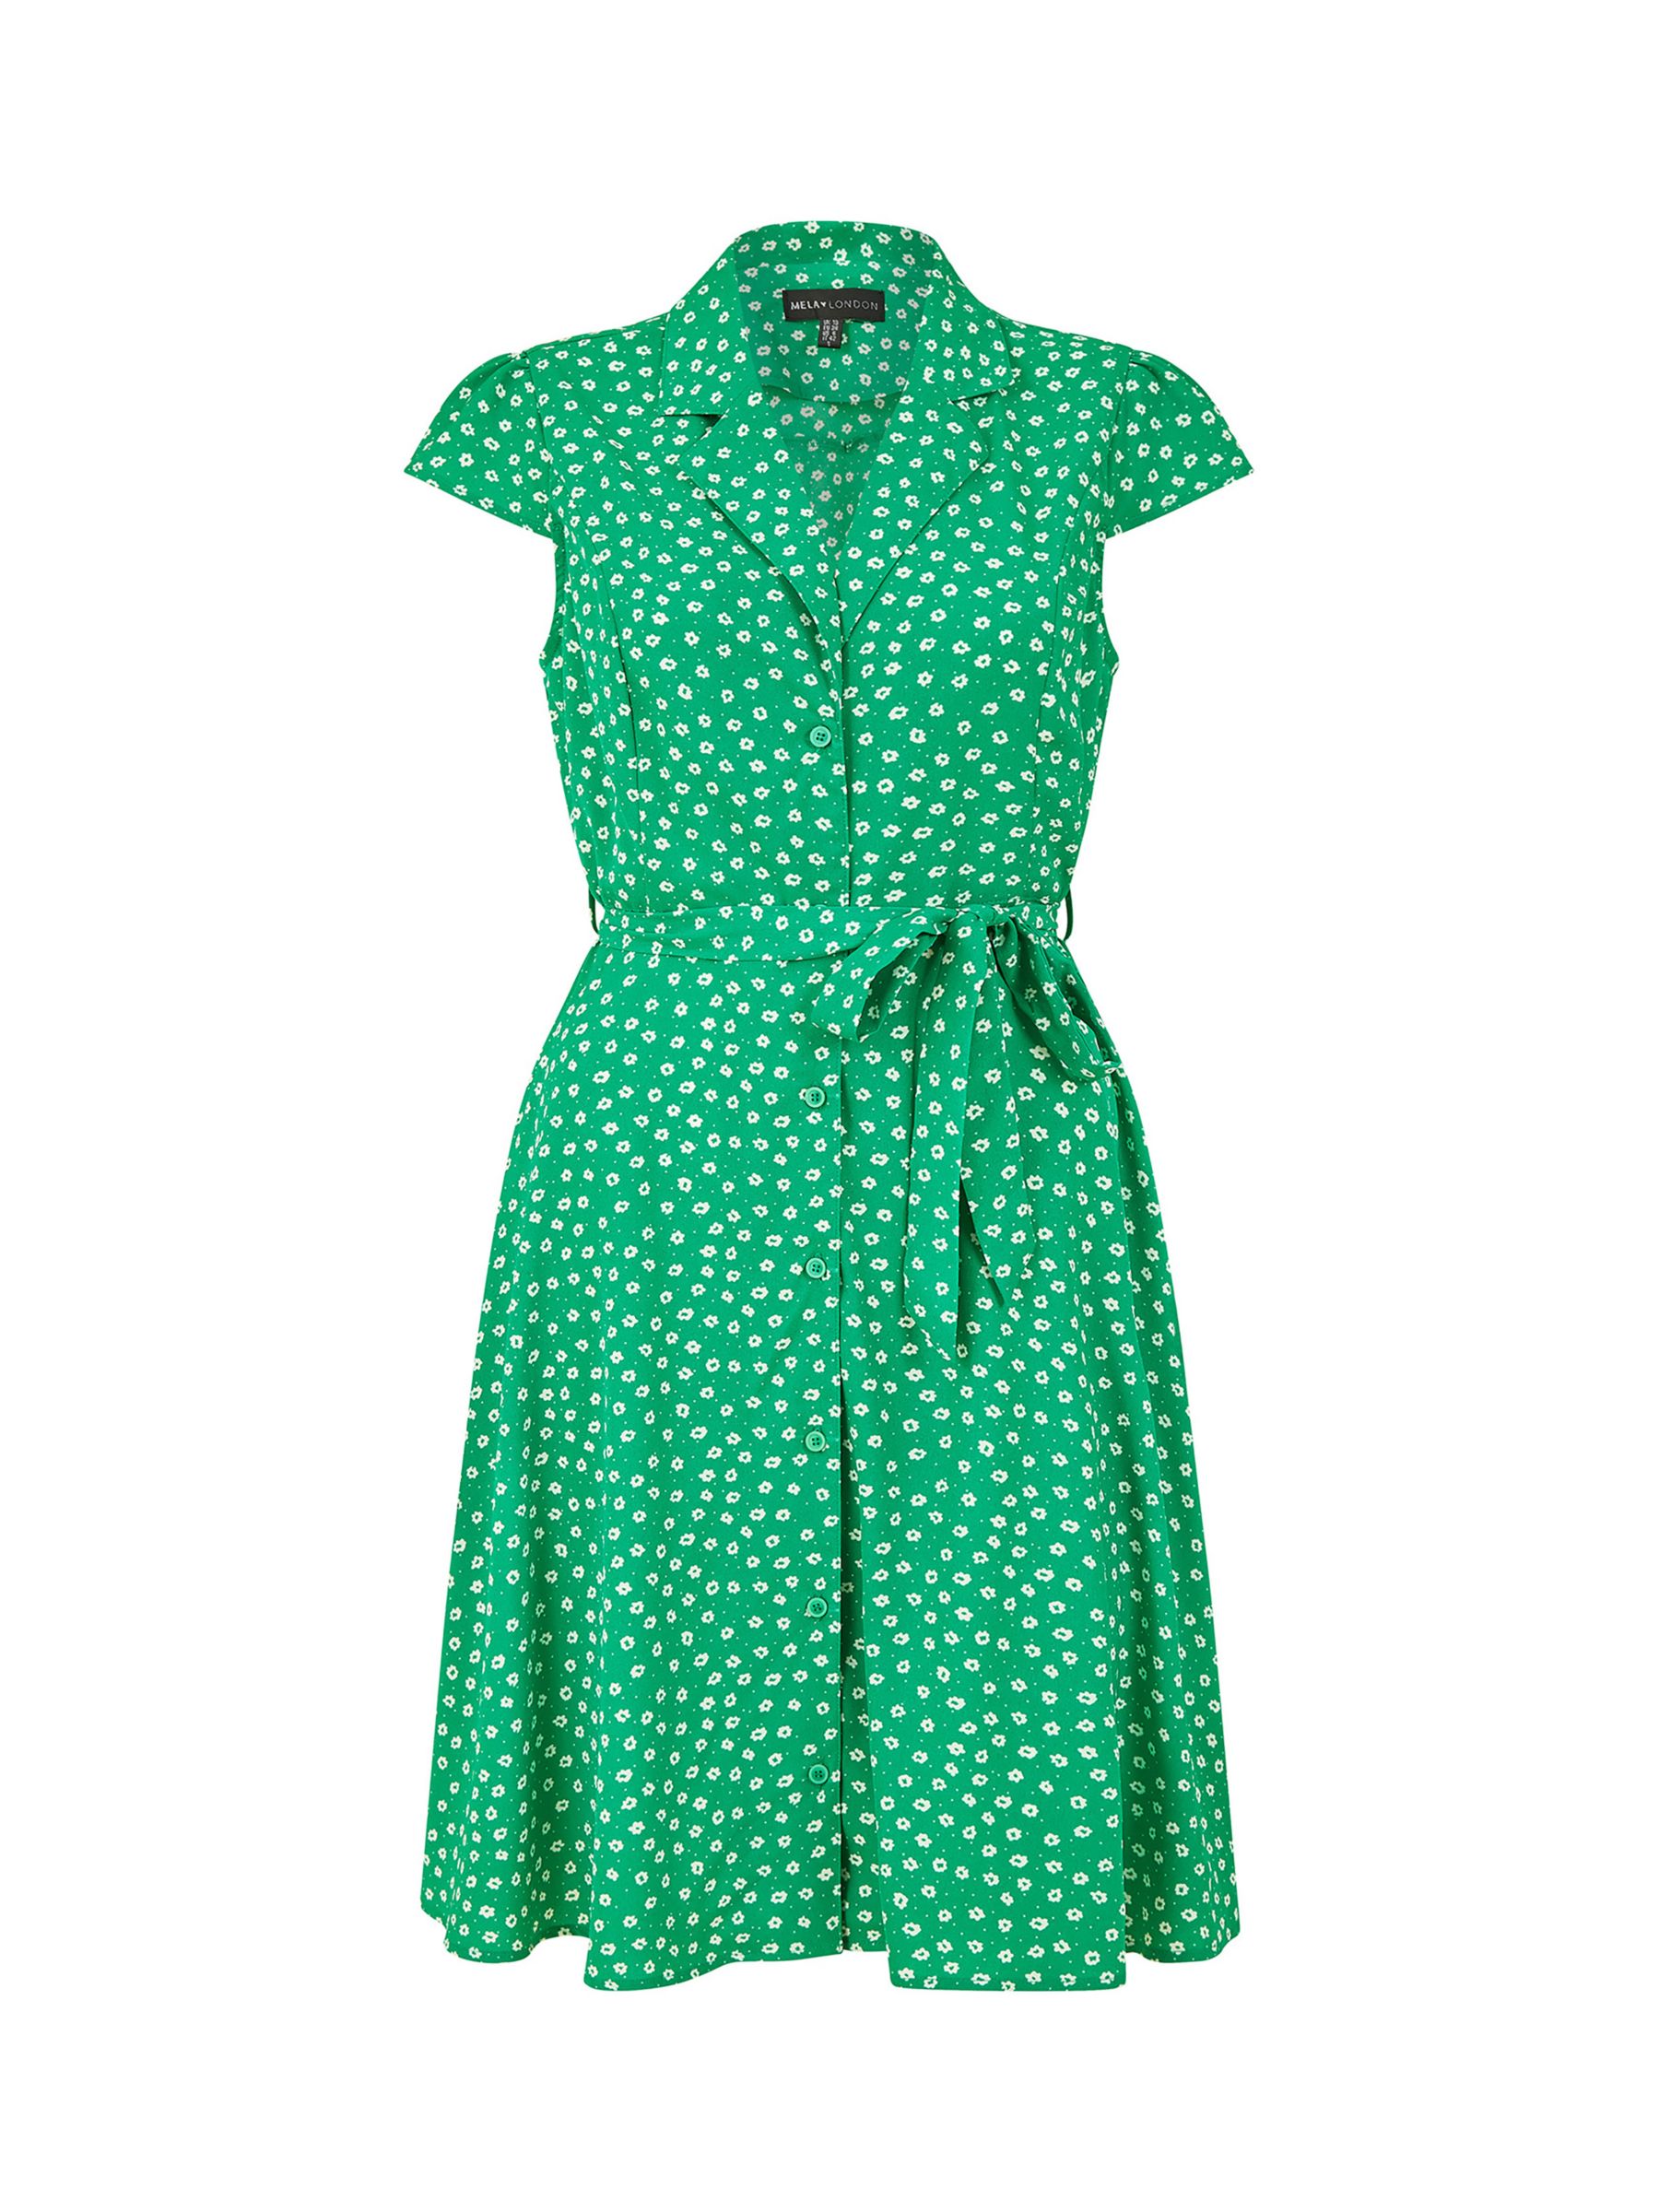 Mela London Daisy Print Retro Shirt Dress, Green at John Lewis & Partners